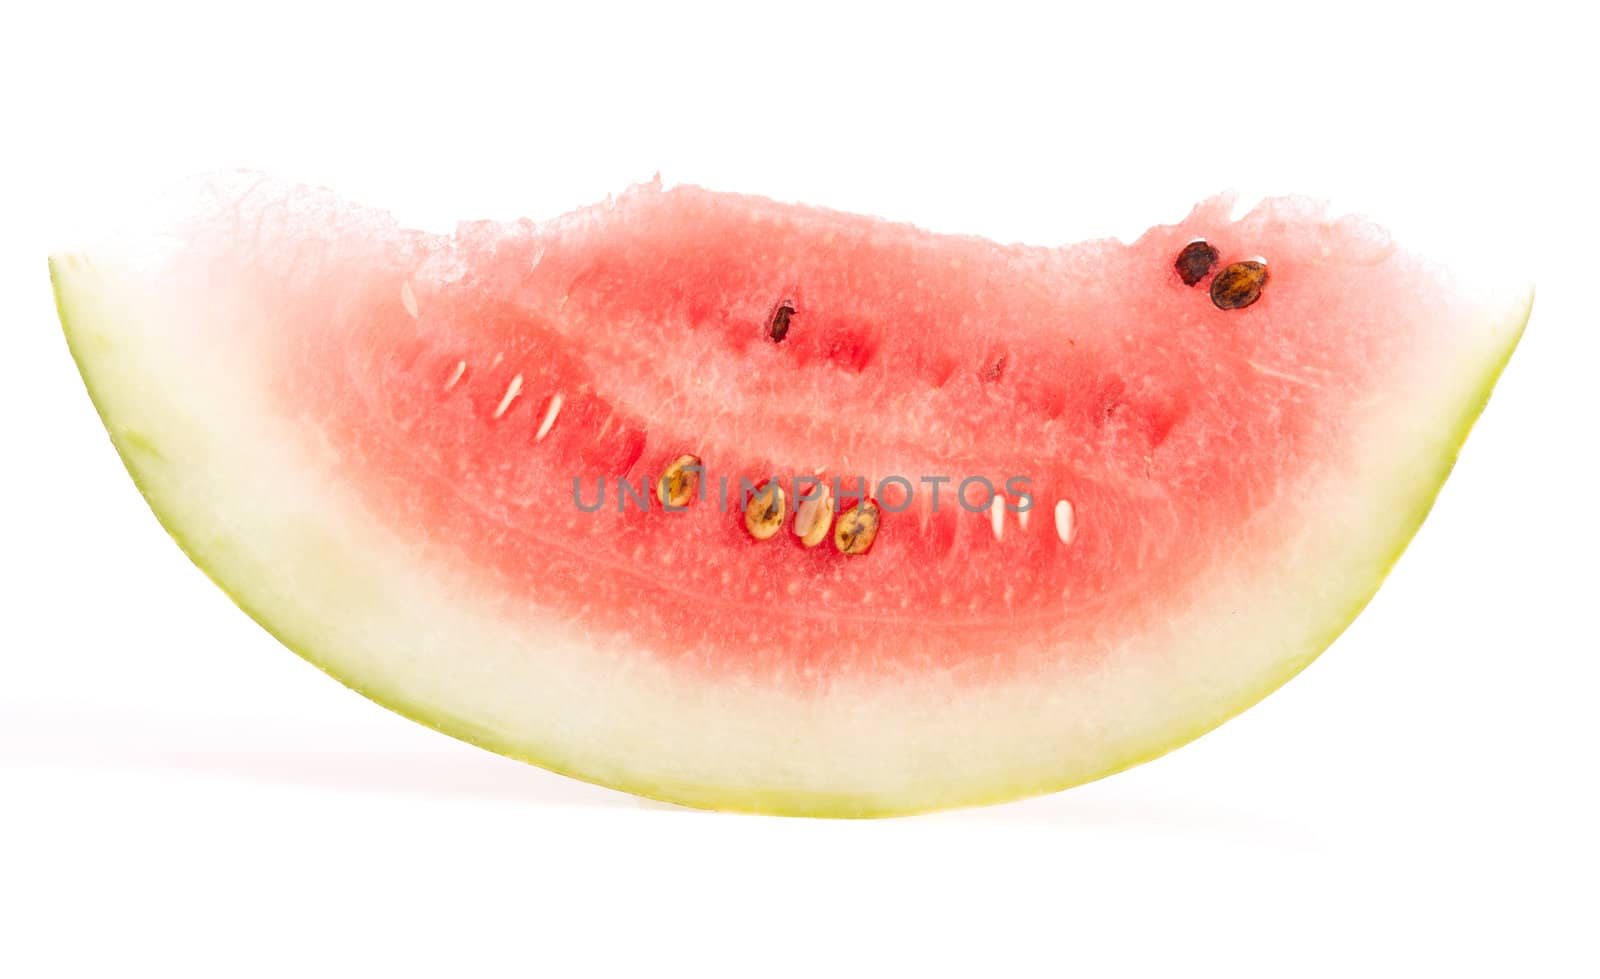 slice of watermelon fruit (isolated on white background)